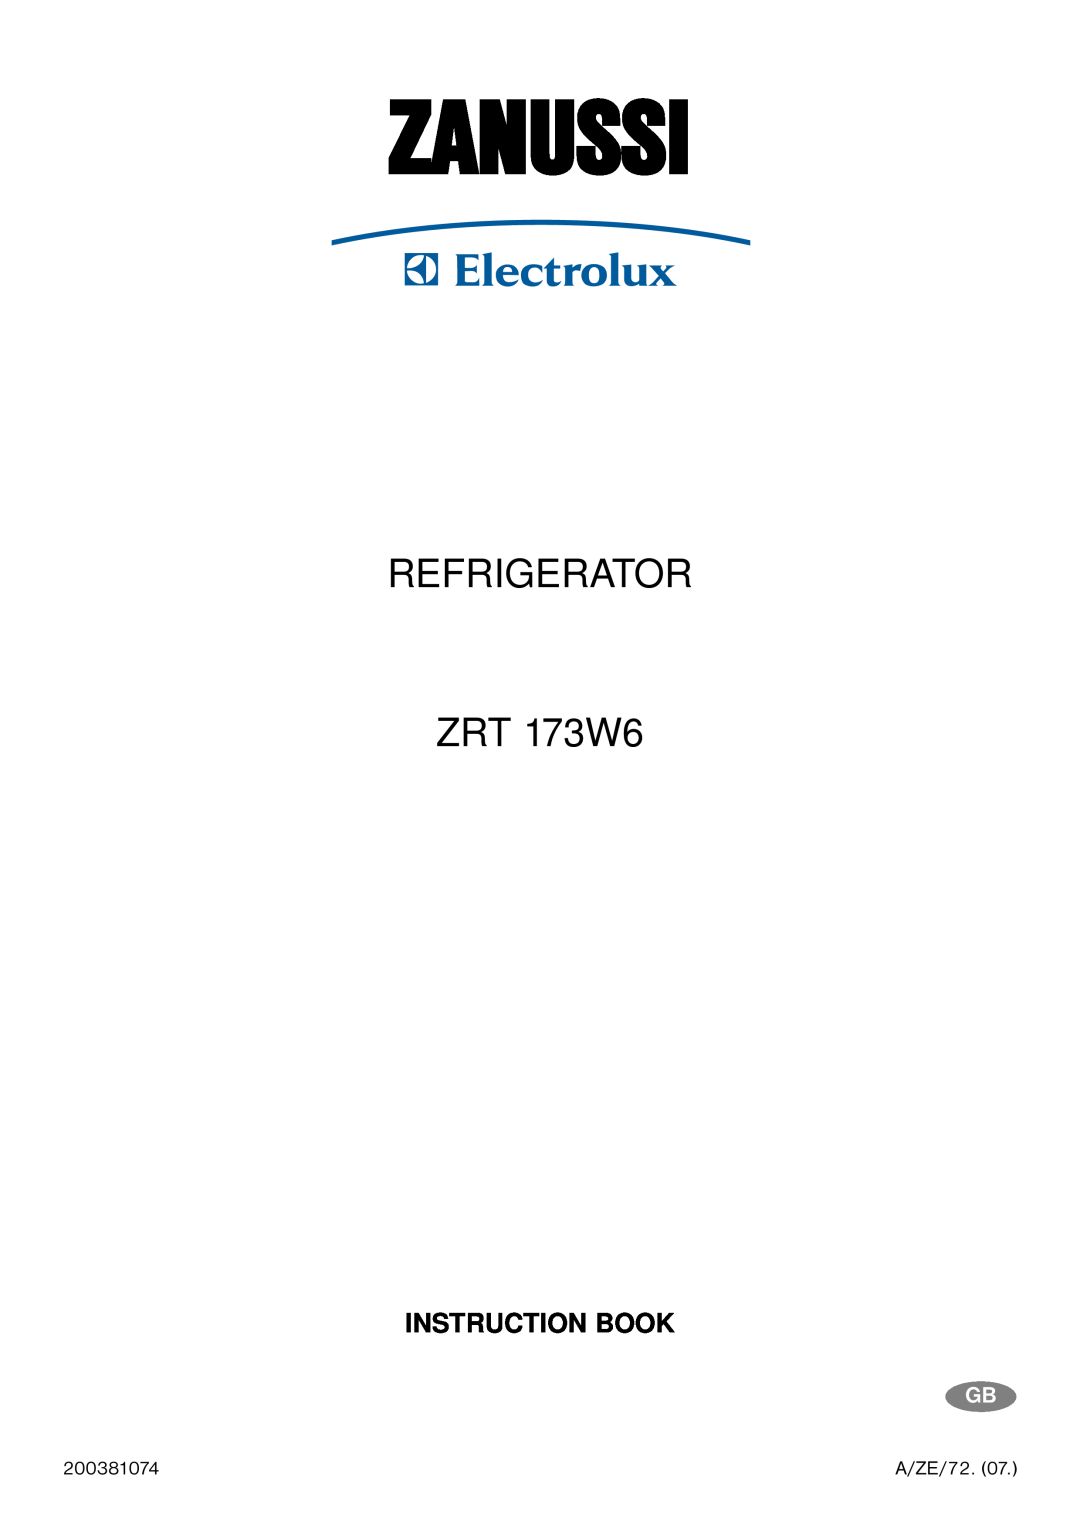 Zanussi manual Zanussi, REFRIGERATOR ZRT 173W6, Instruction Book 